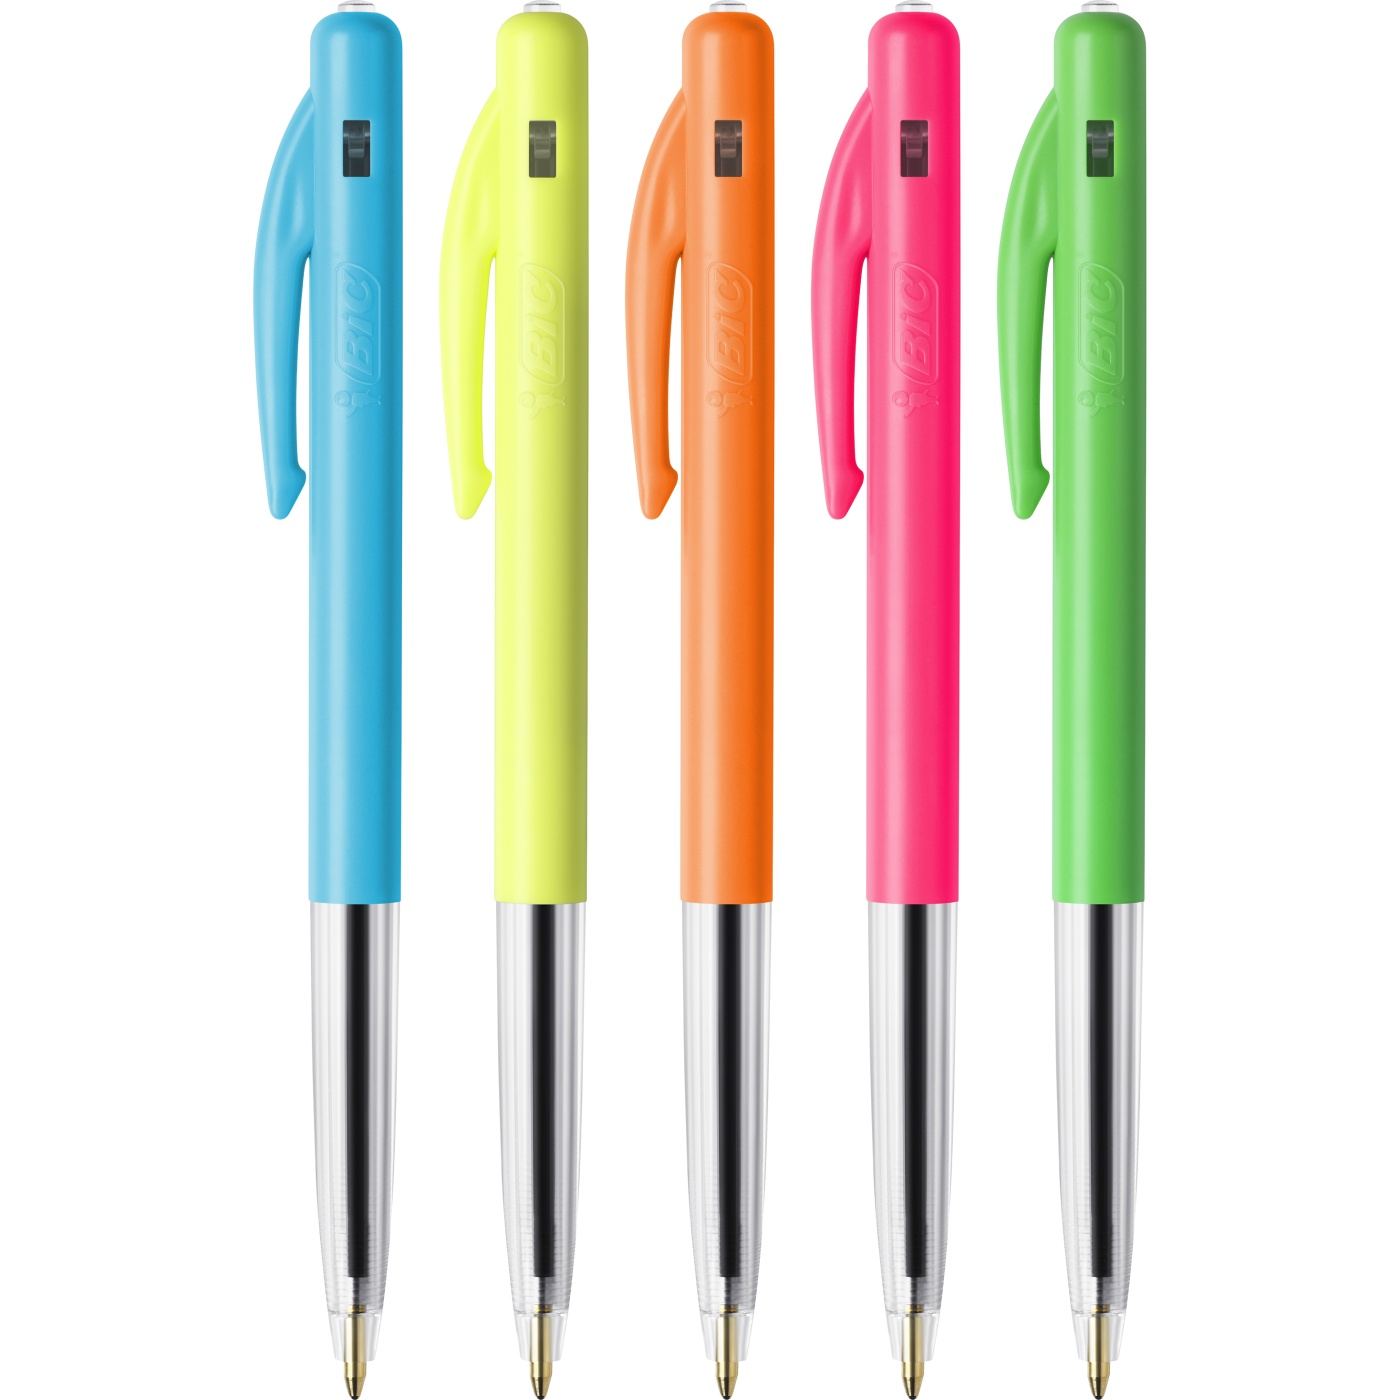 M10 Original Ballpoint Pen 10-set in the group Pens / Office / Office Pens at Pen Store (100235)